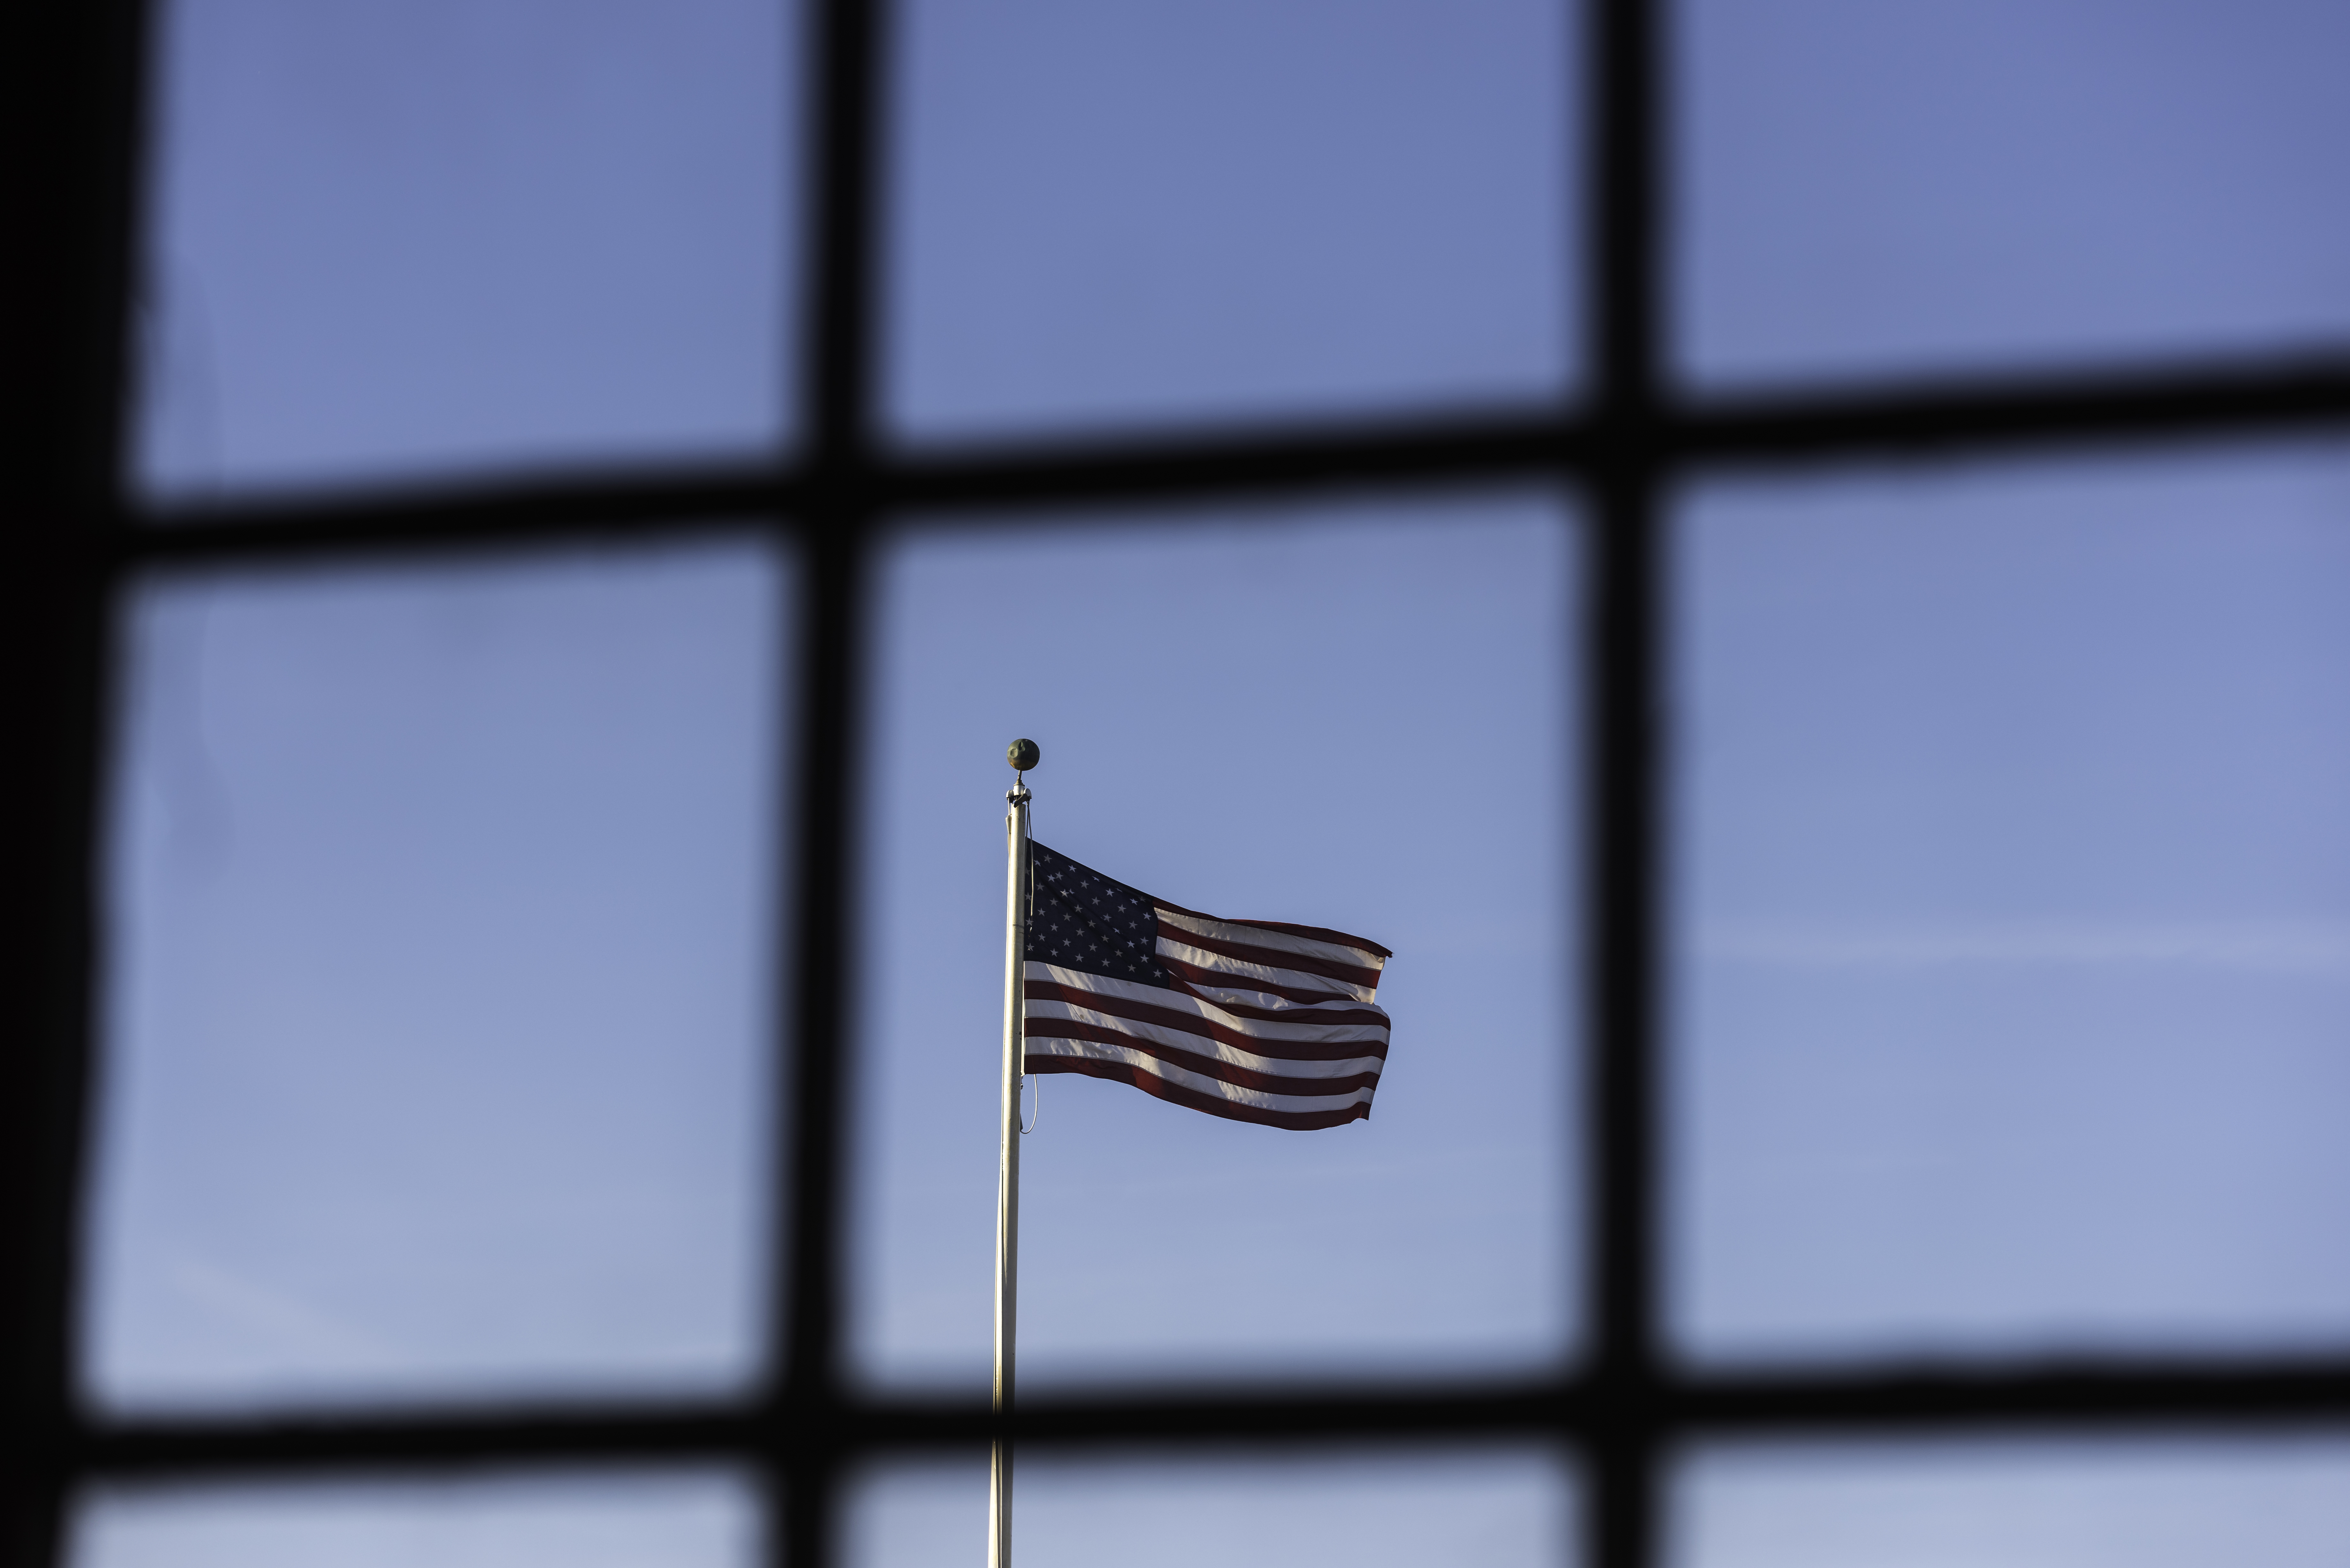 U.S. Flag at sunset